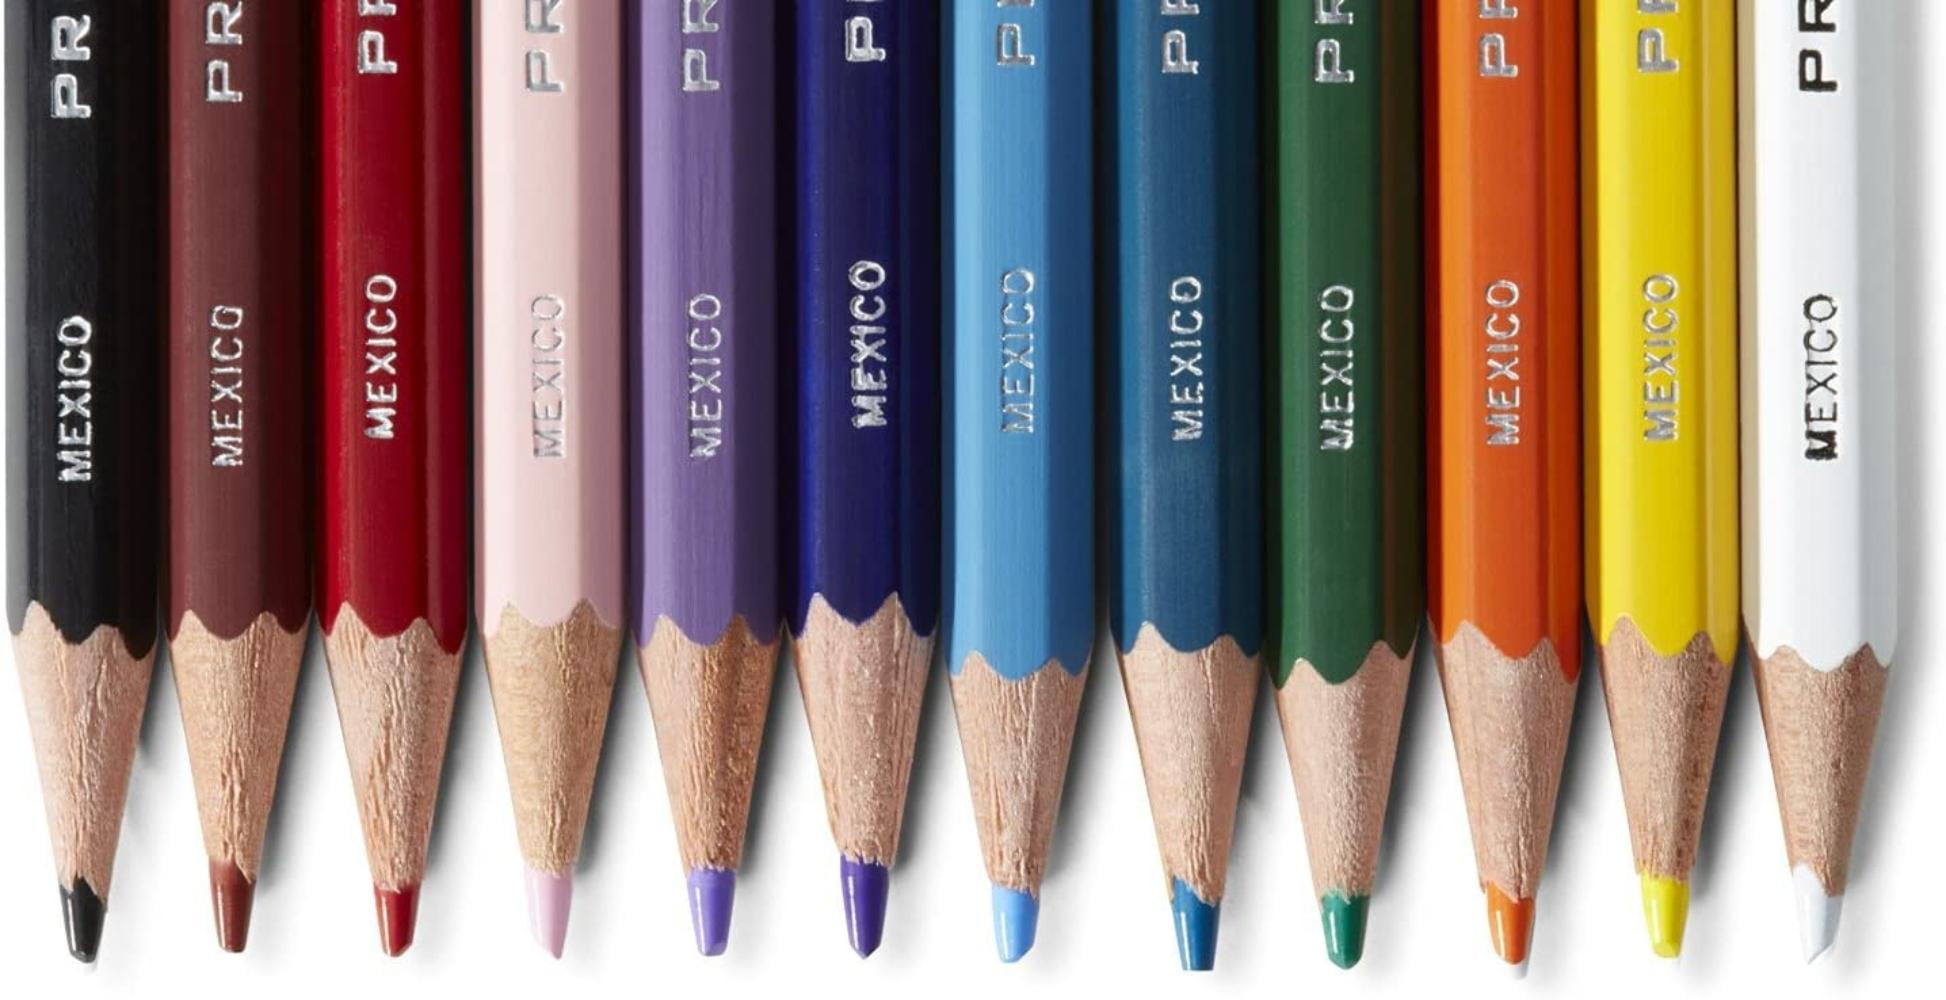 36 Pencils Assorted Colors Prismacolor Premier Verithin Colored Pencils Pack of 1 Box 2428 